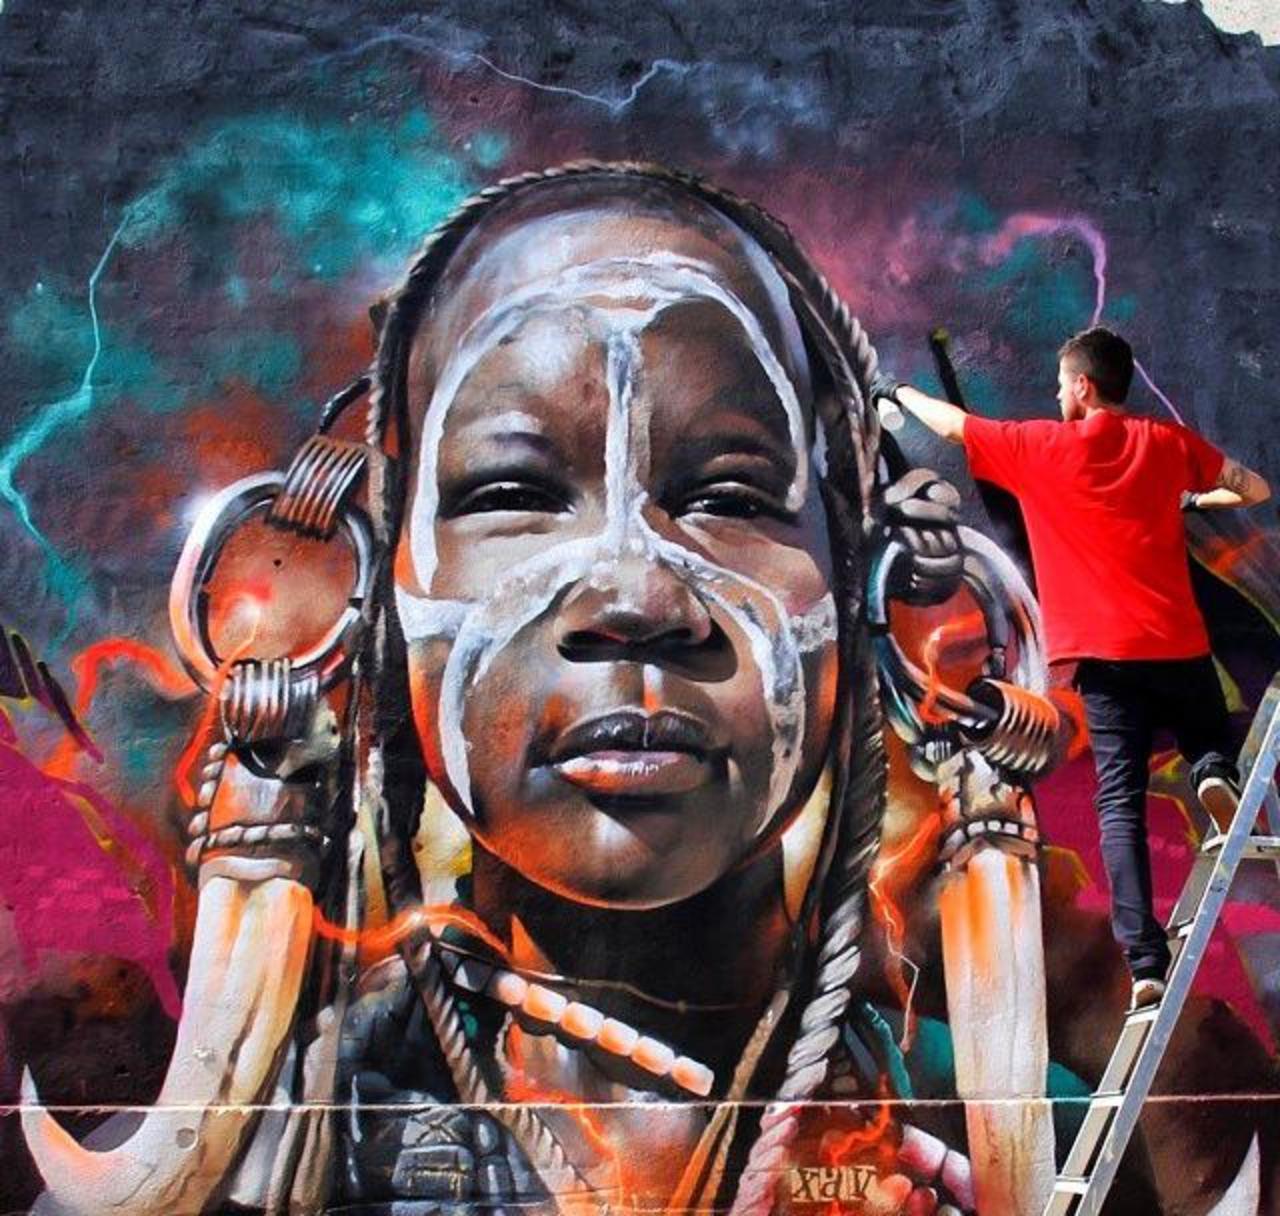 Latest Street Art by the talented - XAV  

#art #arte #graffiti #streetart http://t.co/LpJuUL8RI2